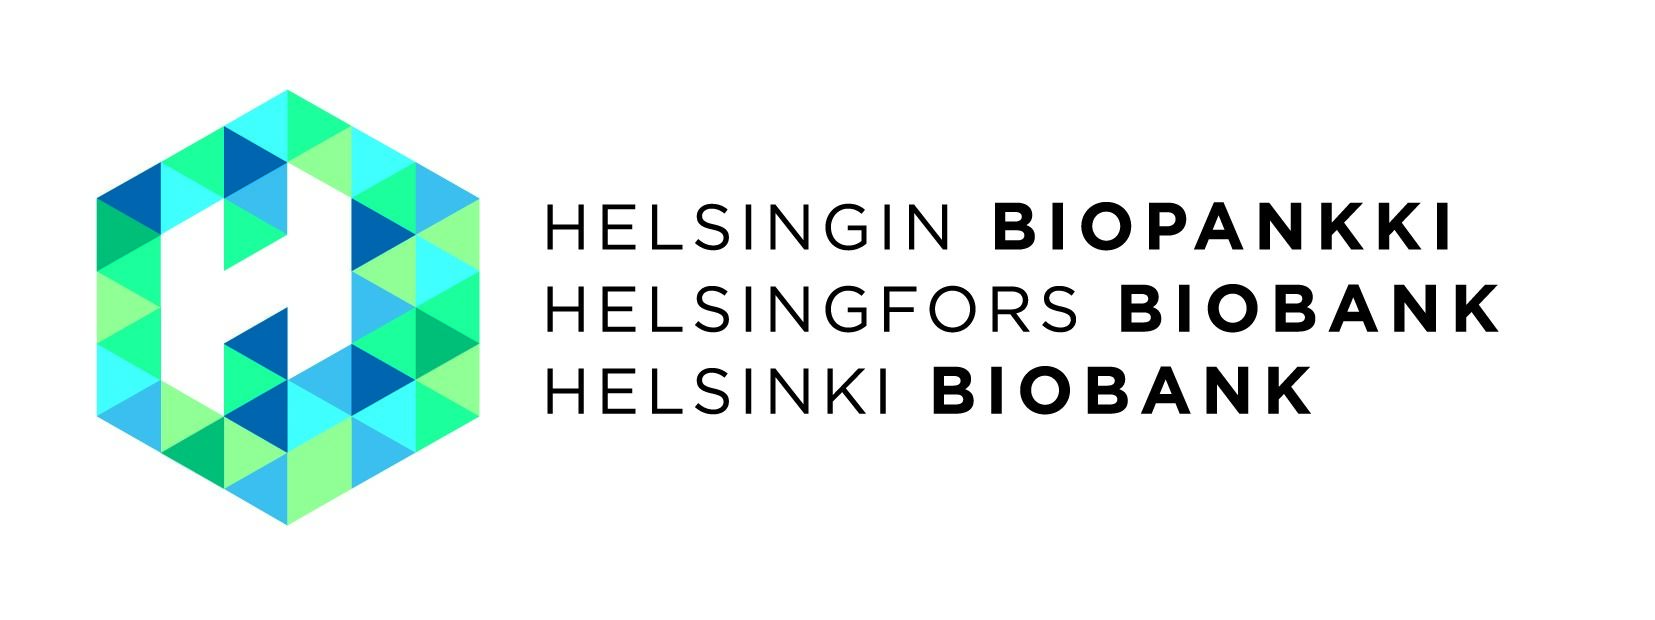 Helsinki biobank's logo